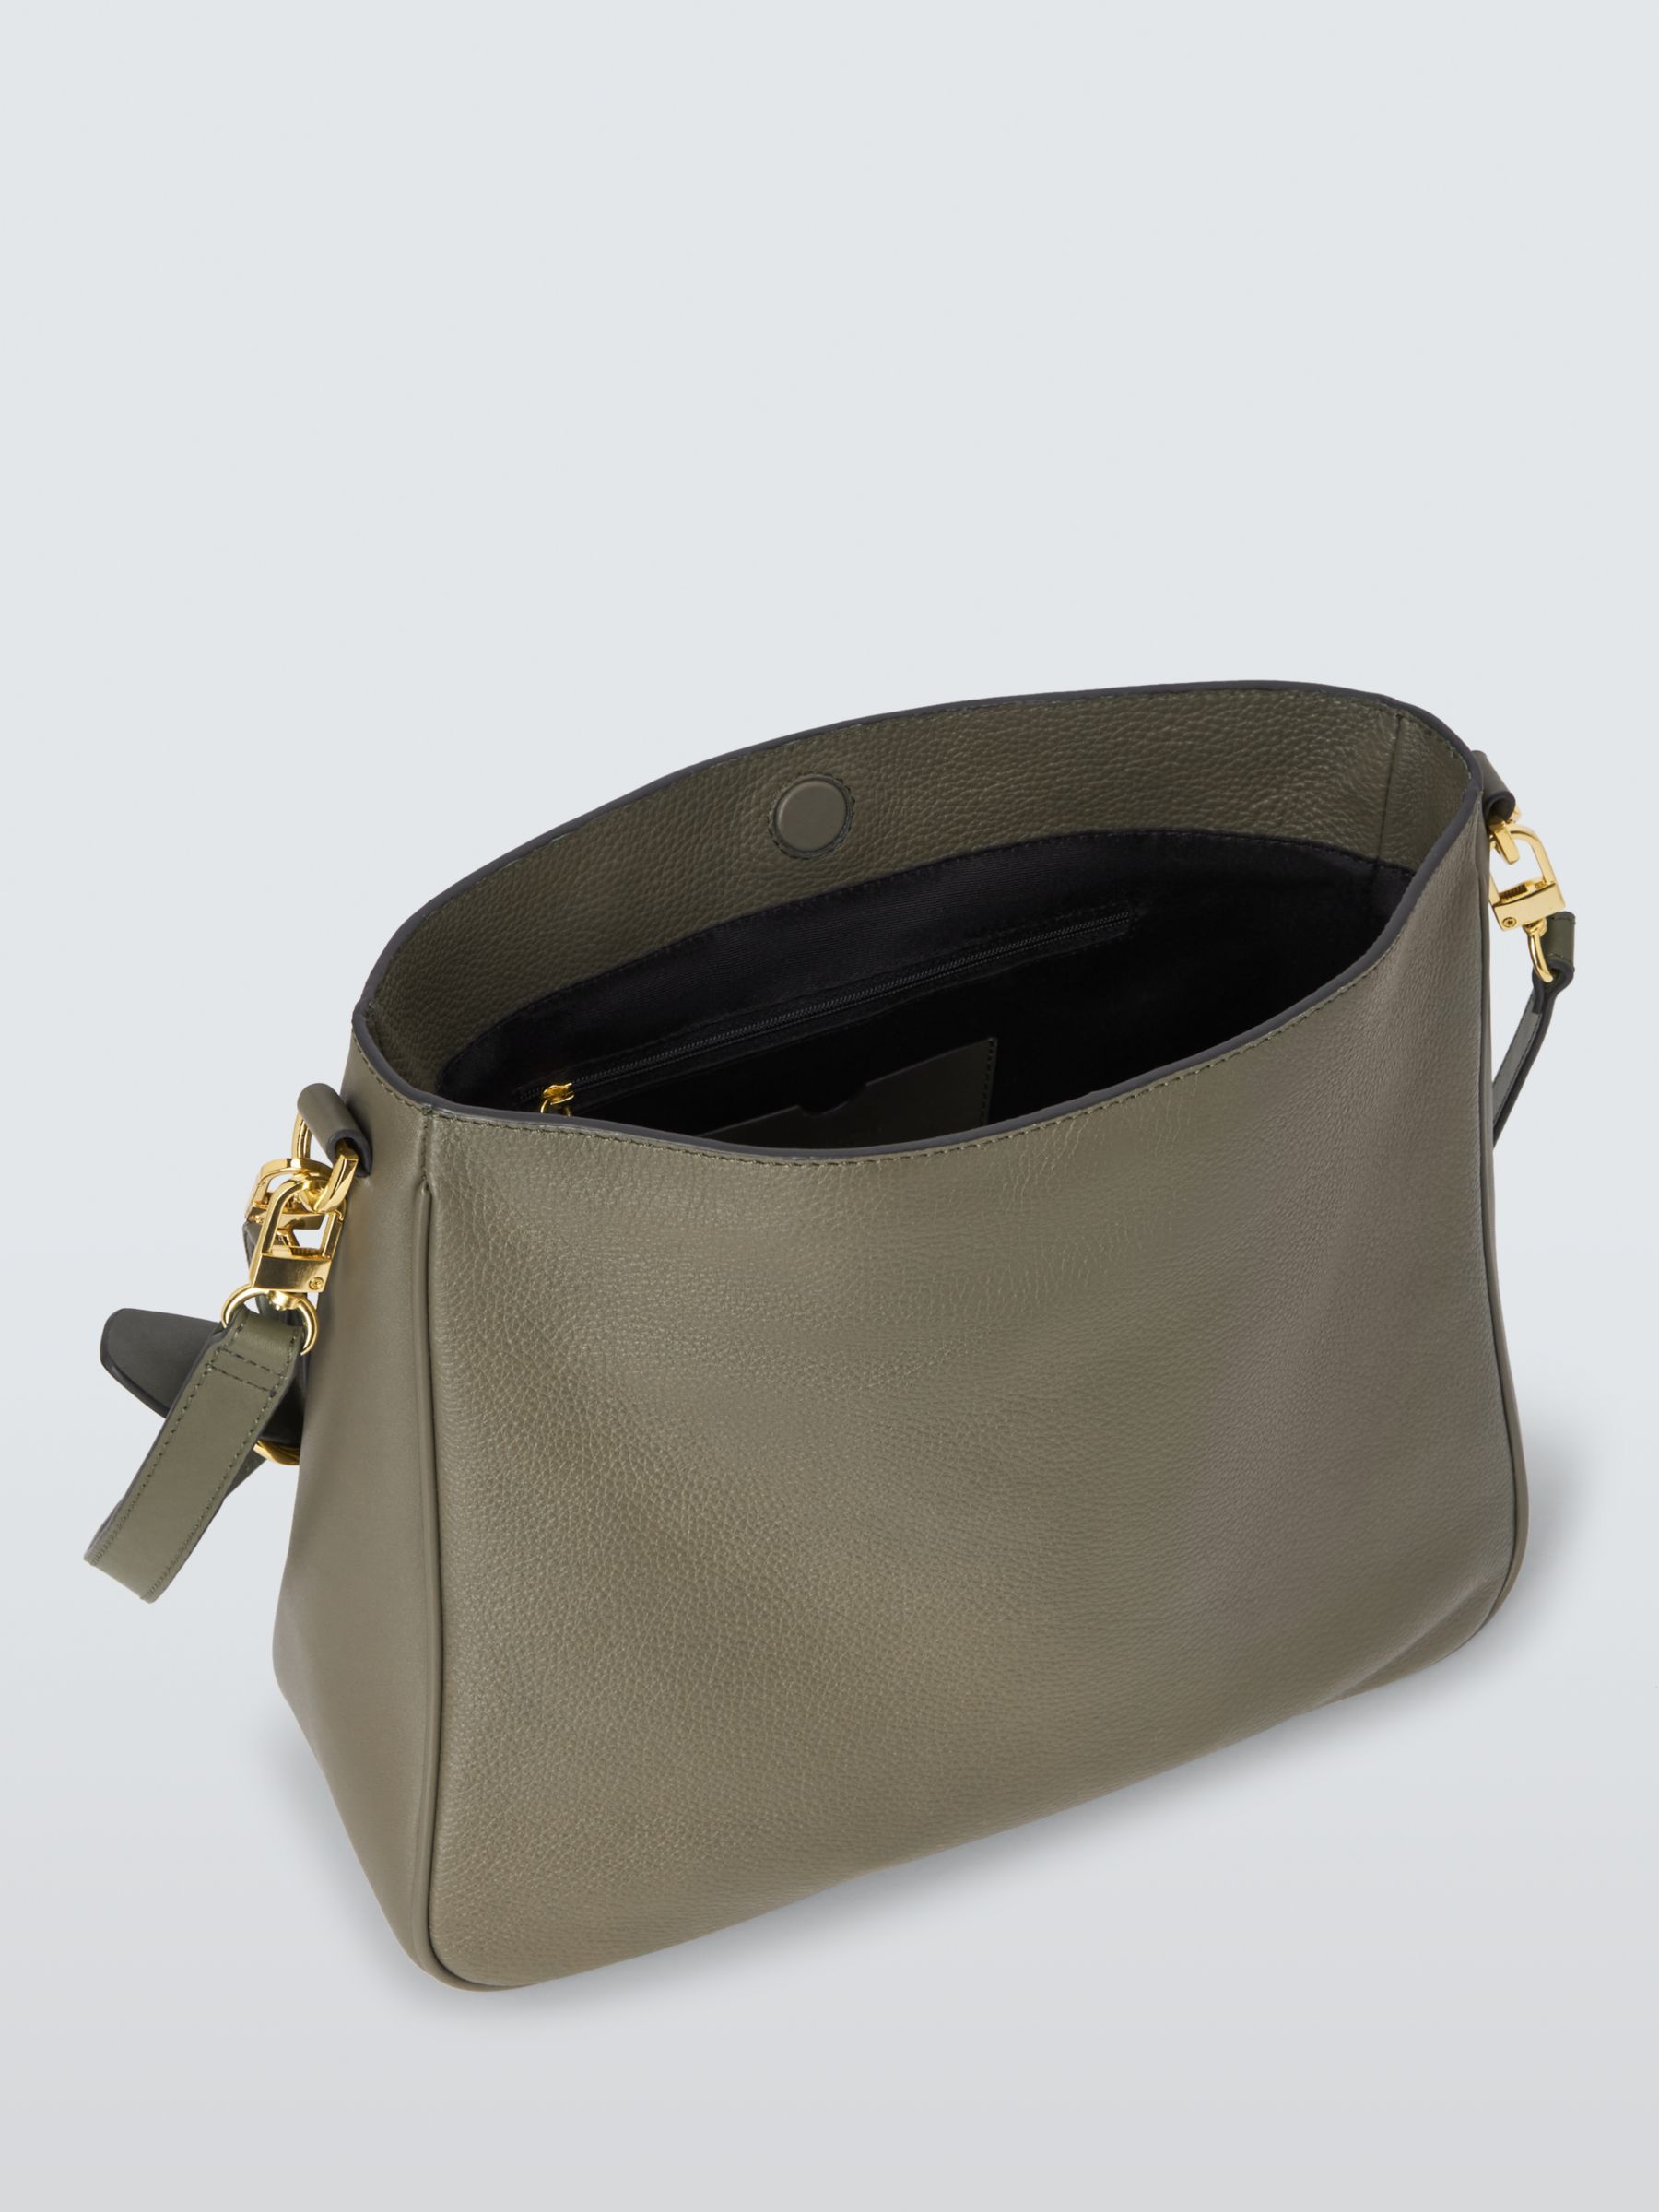 Buy John Lewis Large Buckle Leather Hobo Bag Online at johnlewis.com